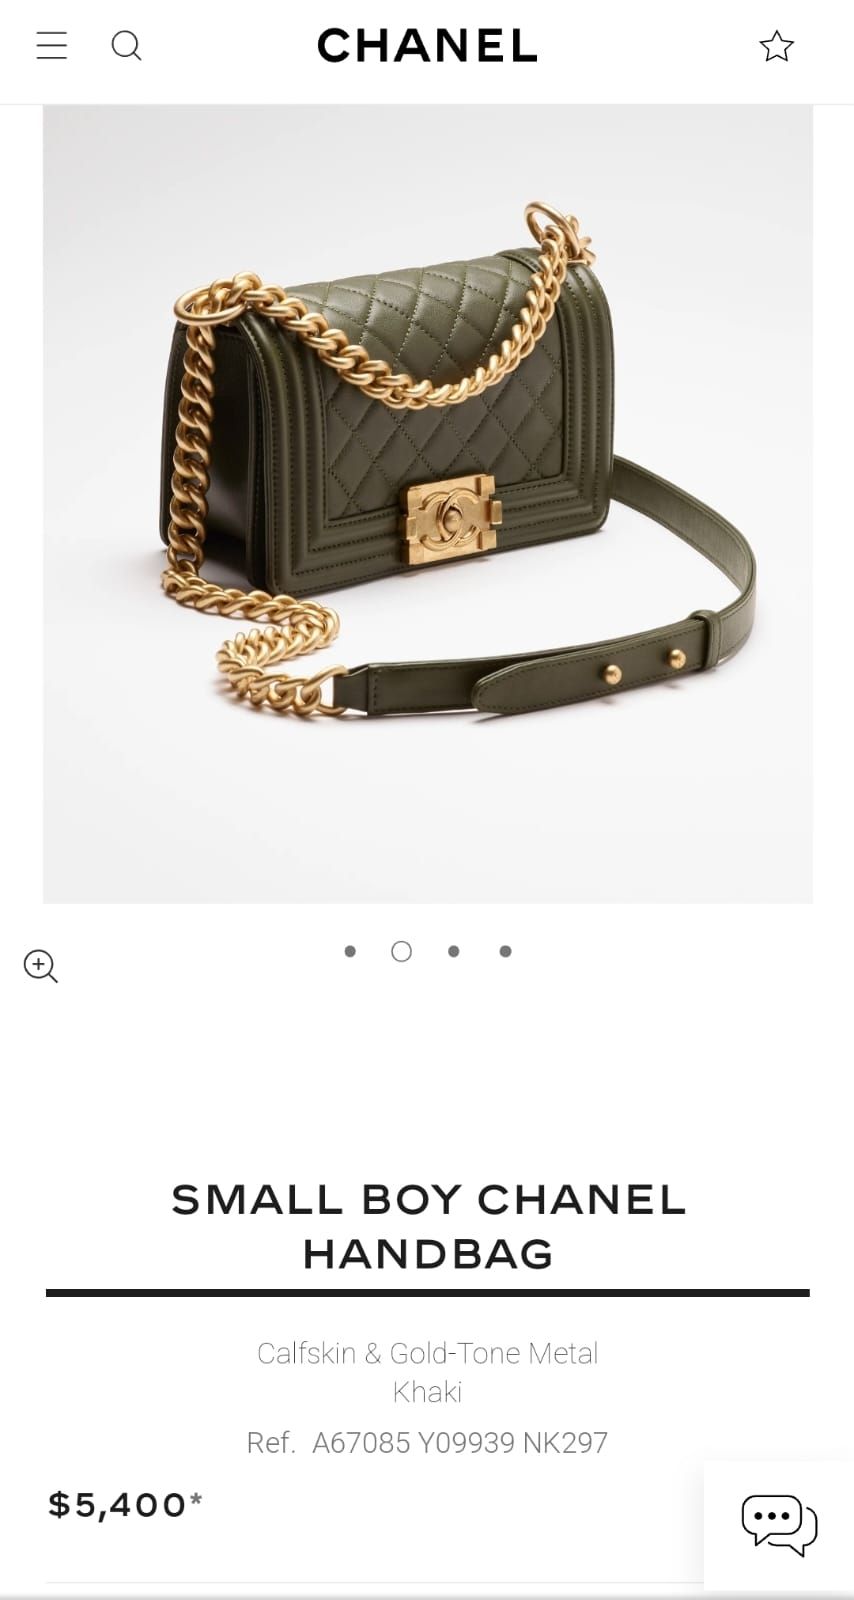 Harga Tas Chanel Jessica Iskandar yang Mau Dijual. (Chanel)